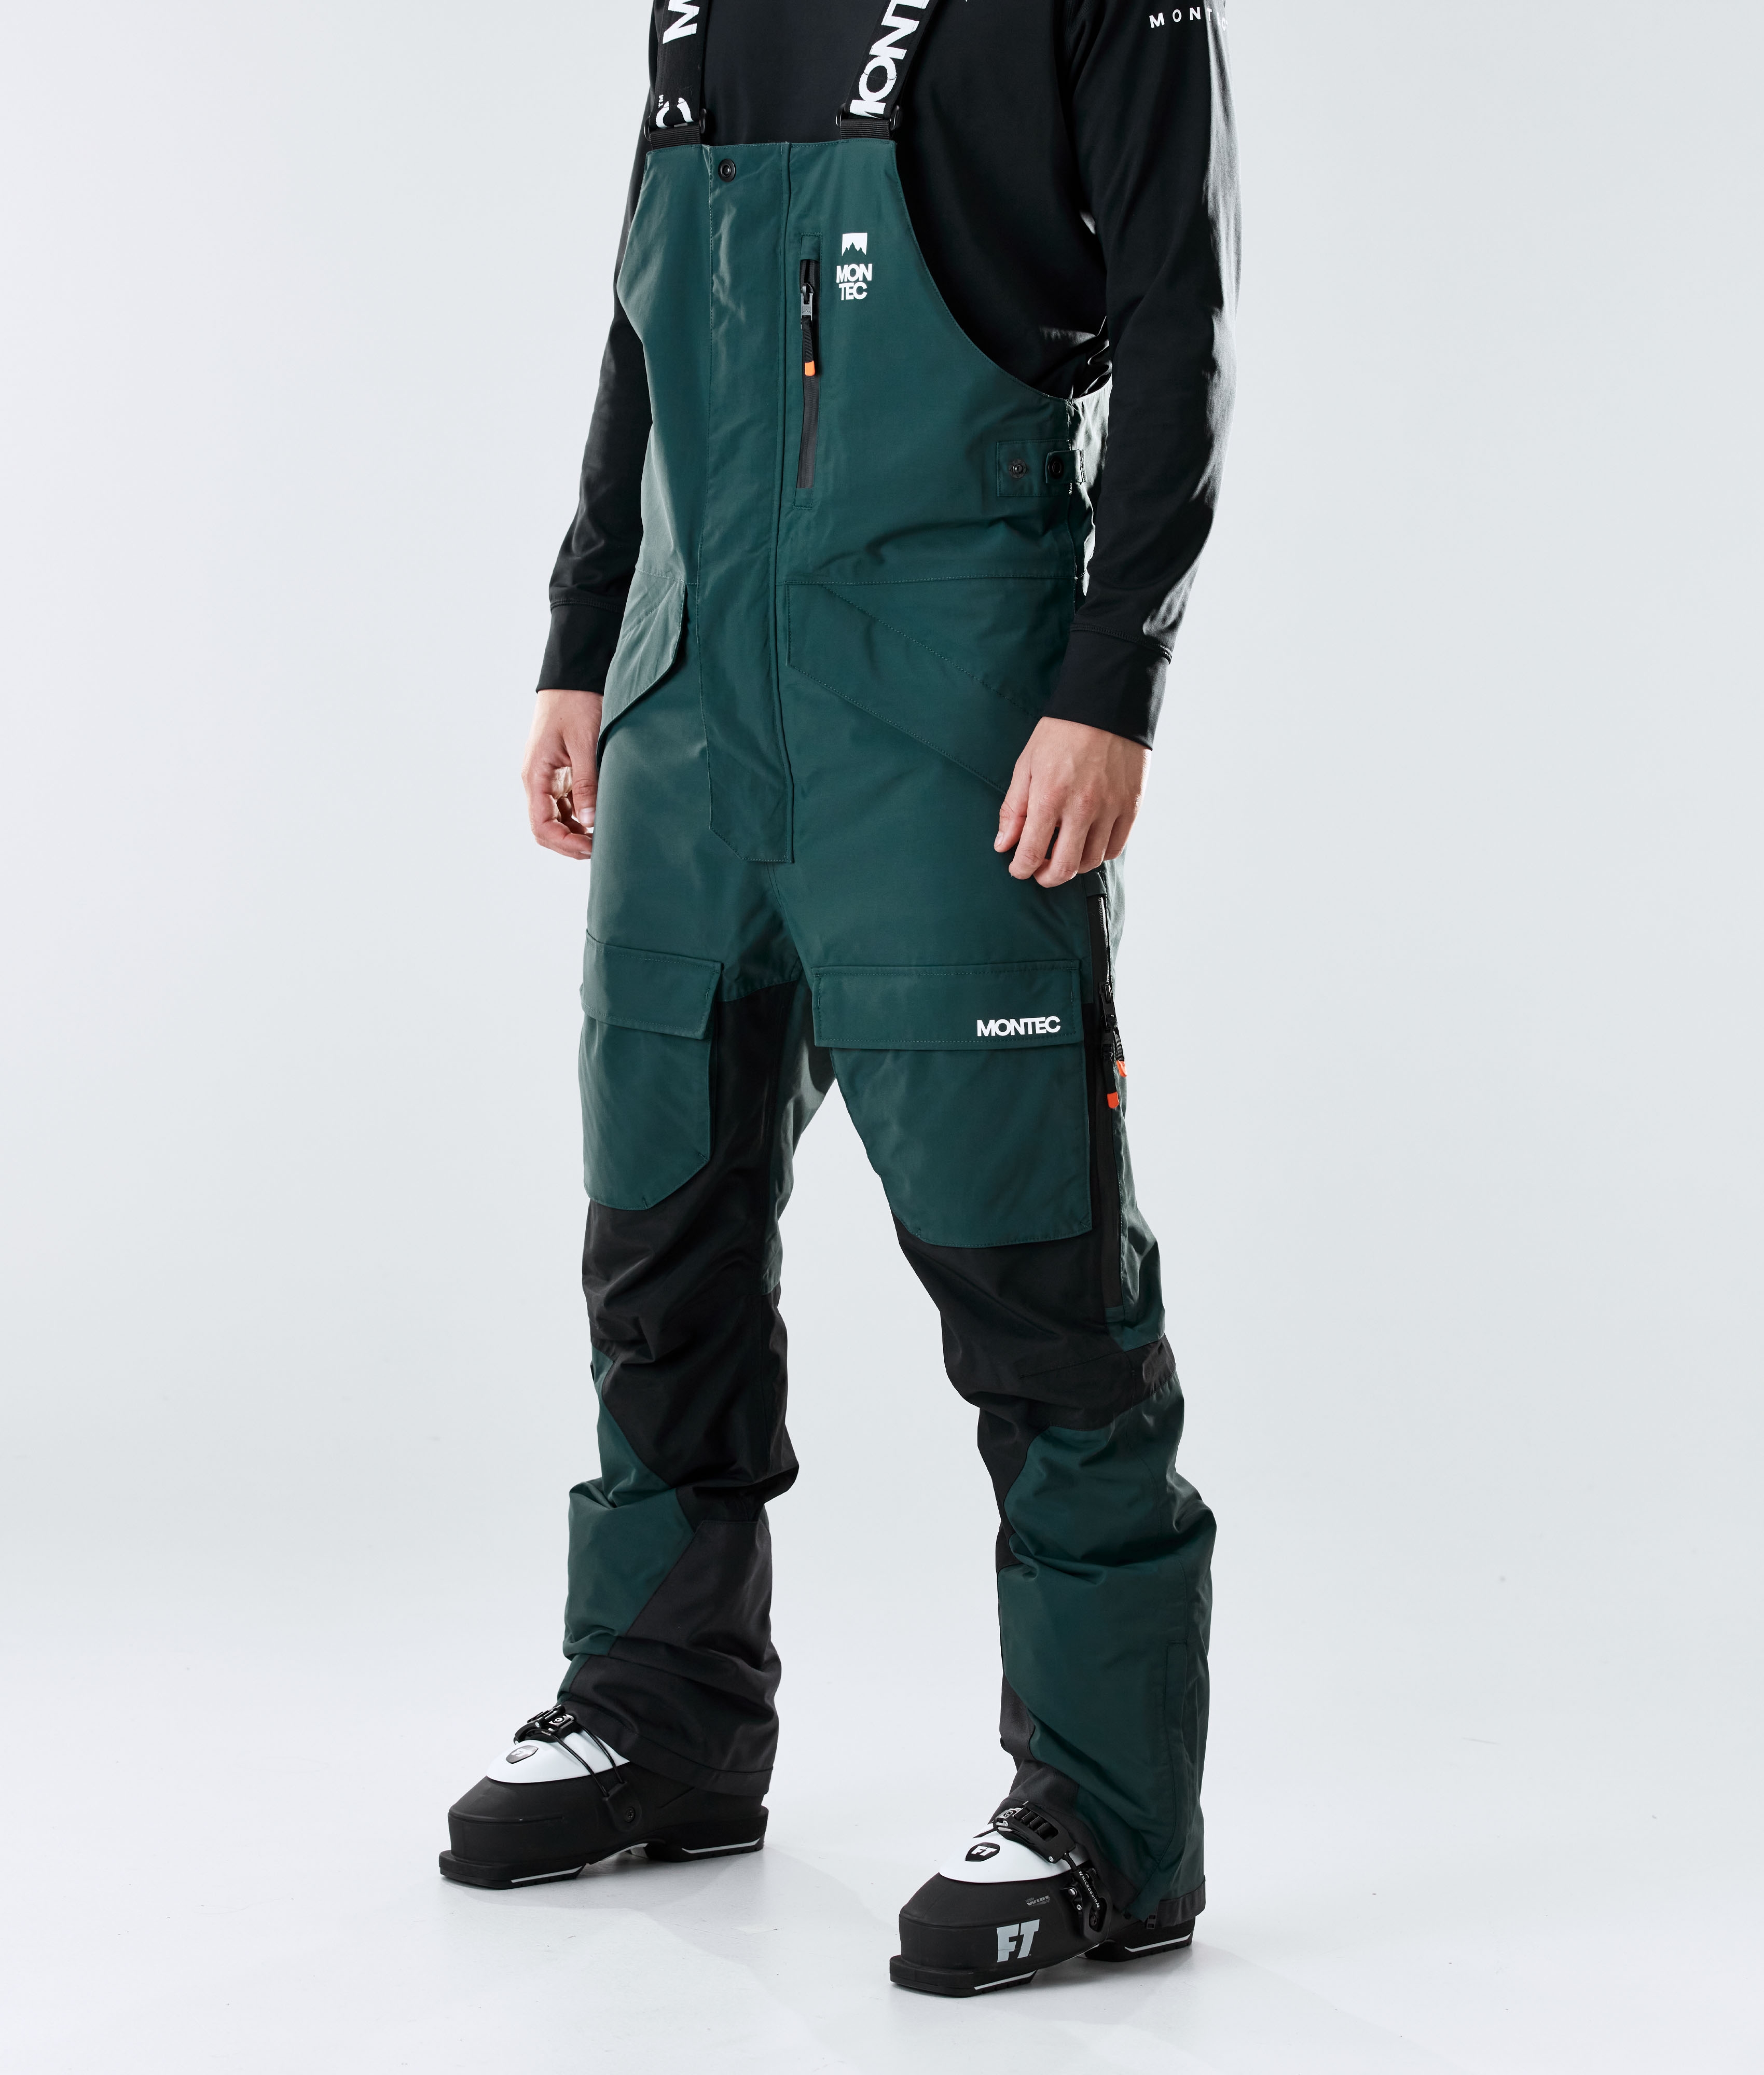 Montec Fawk 2020 スキーパンツ メンズ Dark Atlantic/Black - 緑